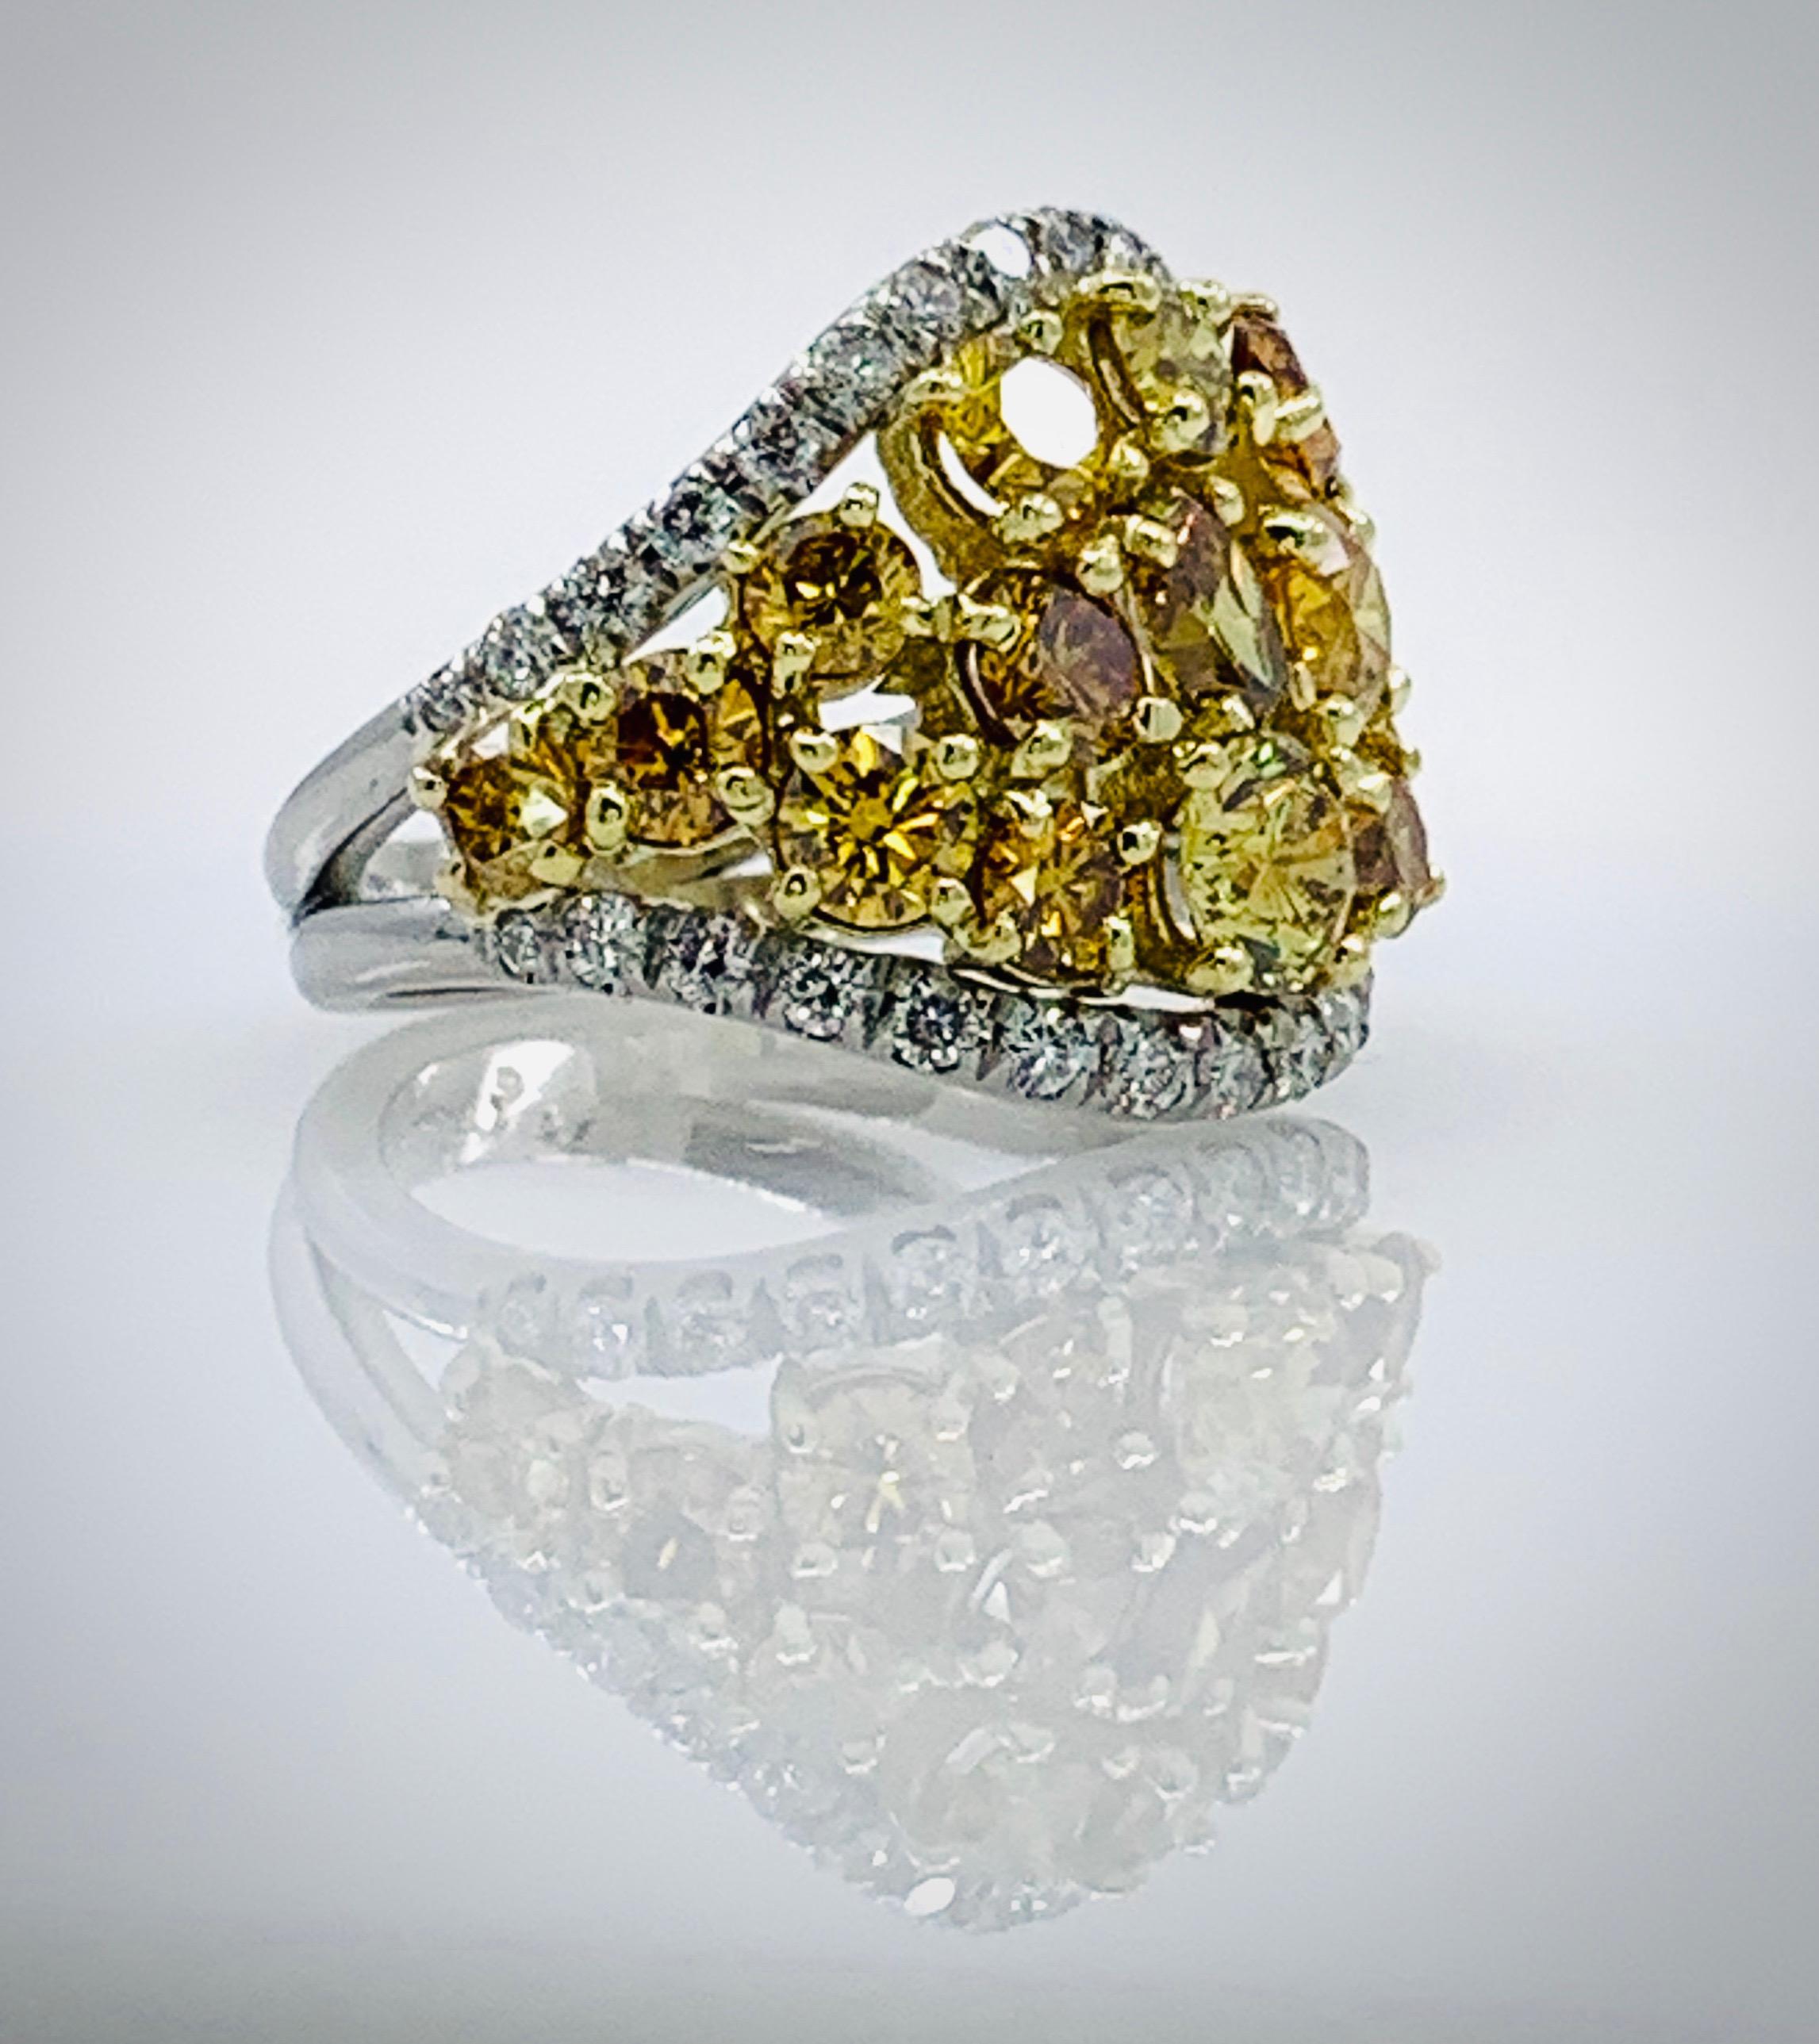 4.6 Carat Natural Yellow Diamond Shield Ring in Platinum and 18 Karat Yellow Gol For Sale 2